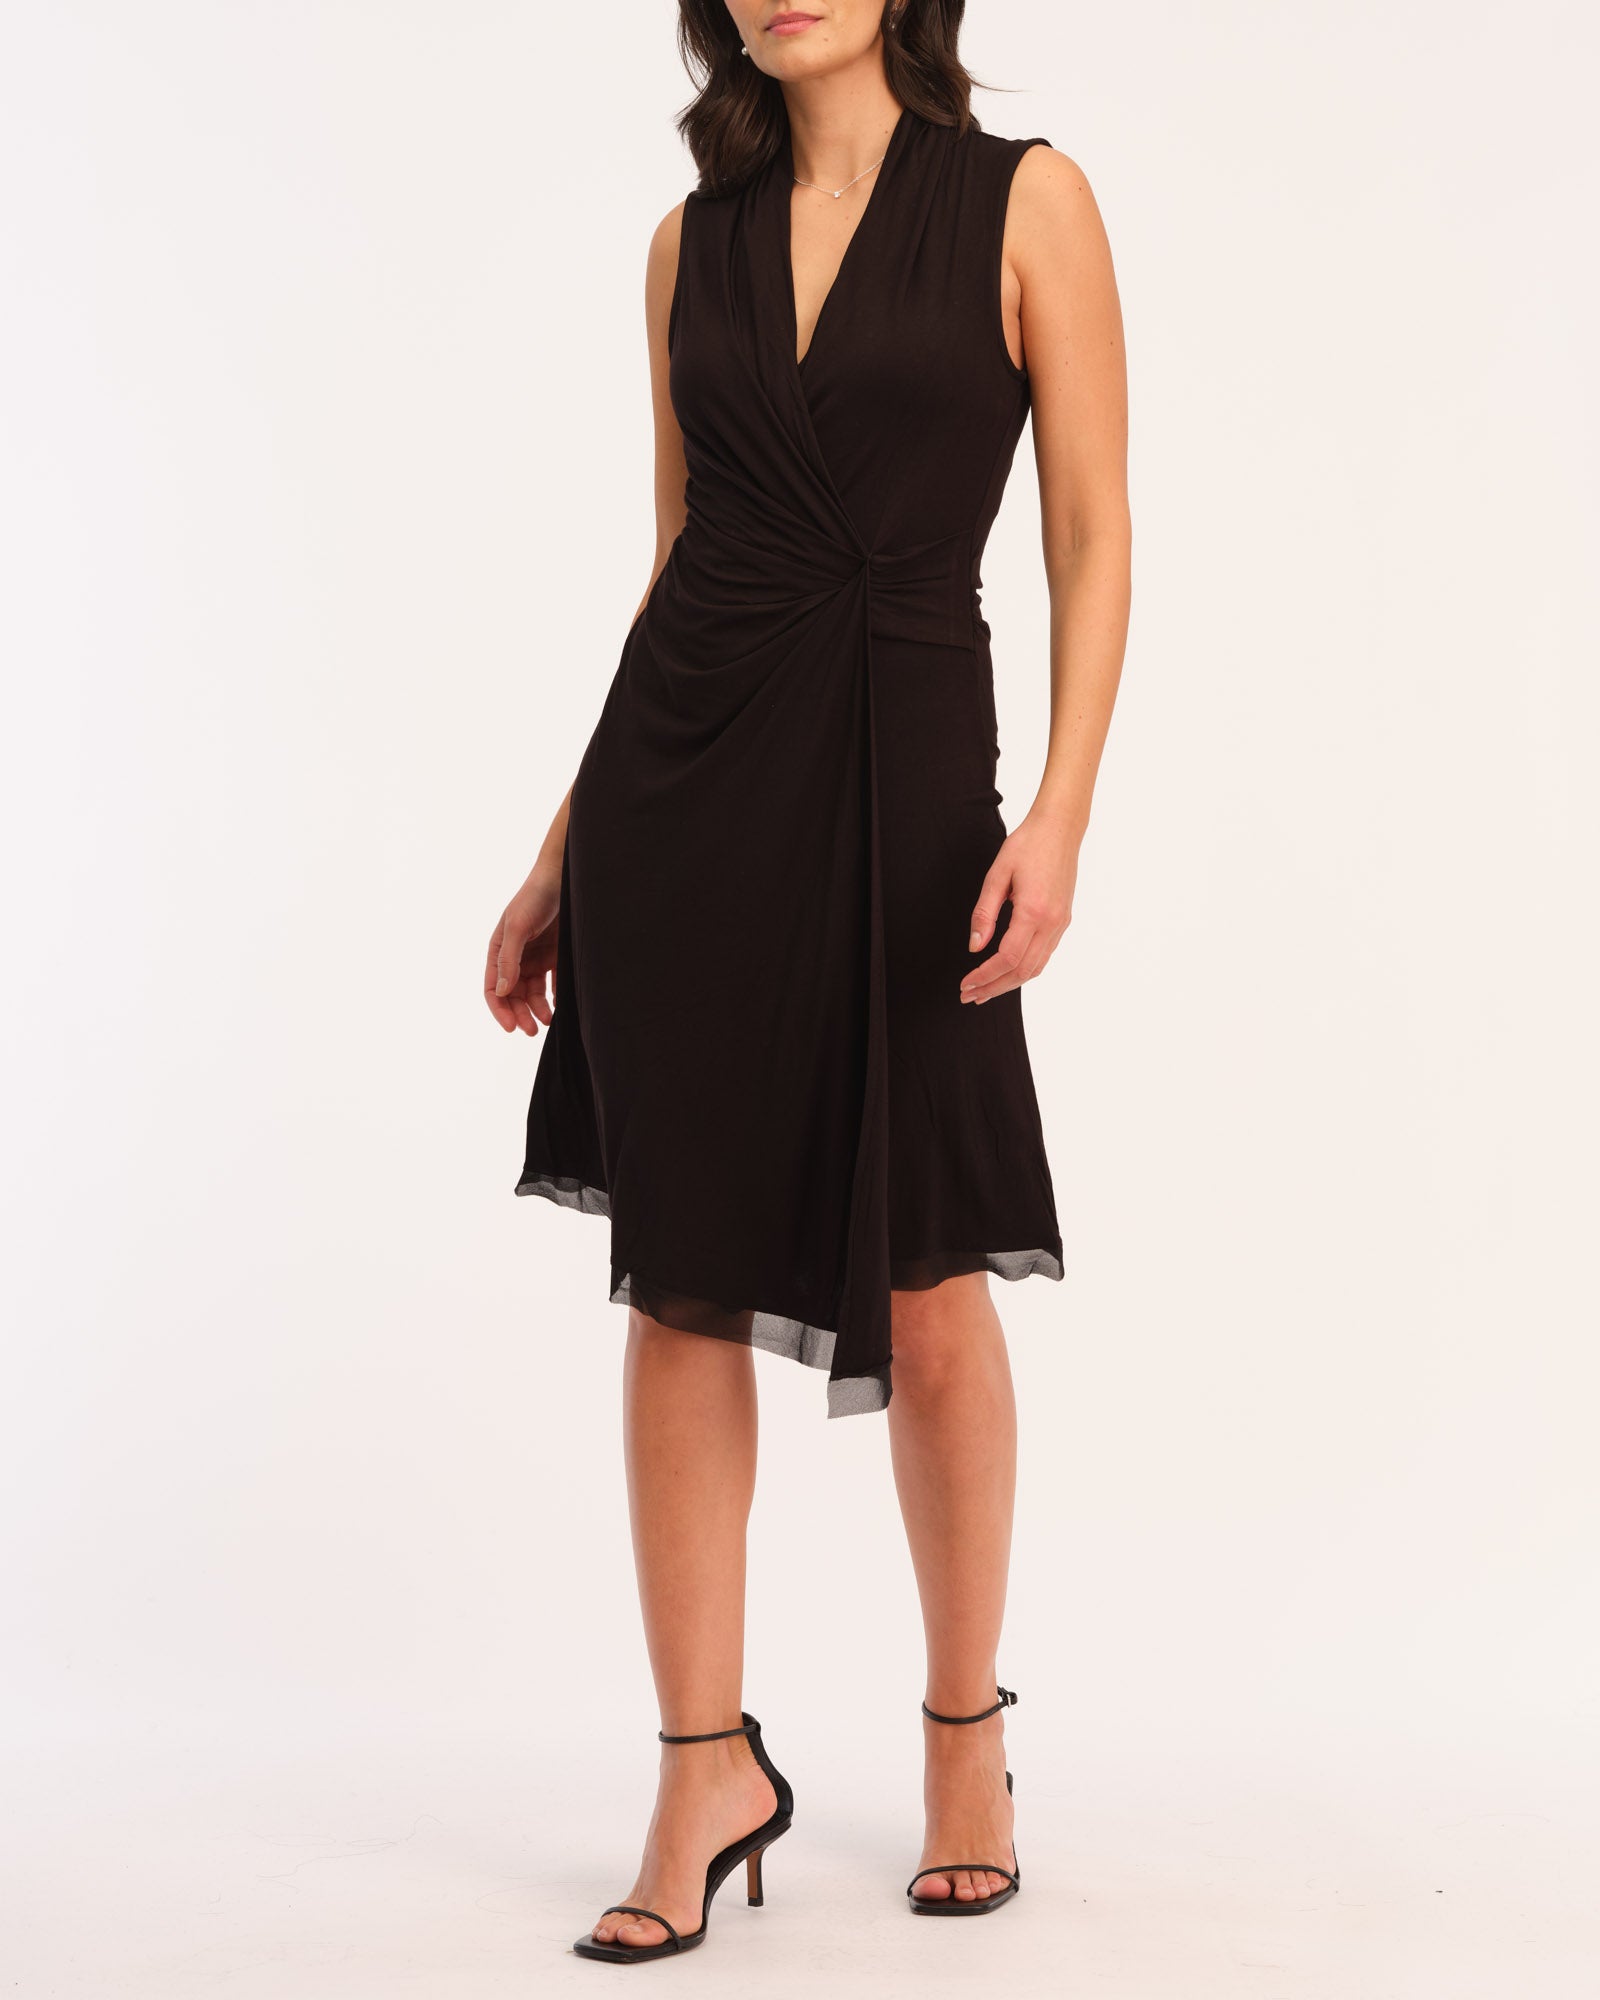 Shop Elie Elie Tahari Women's Twist Front Jersey Dress | JANE + MERCER